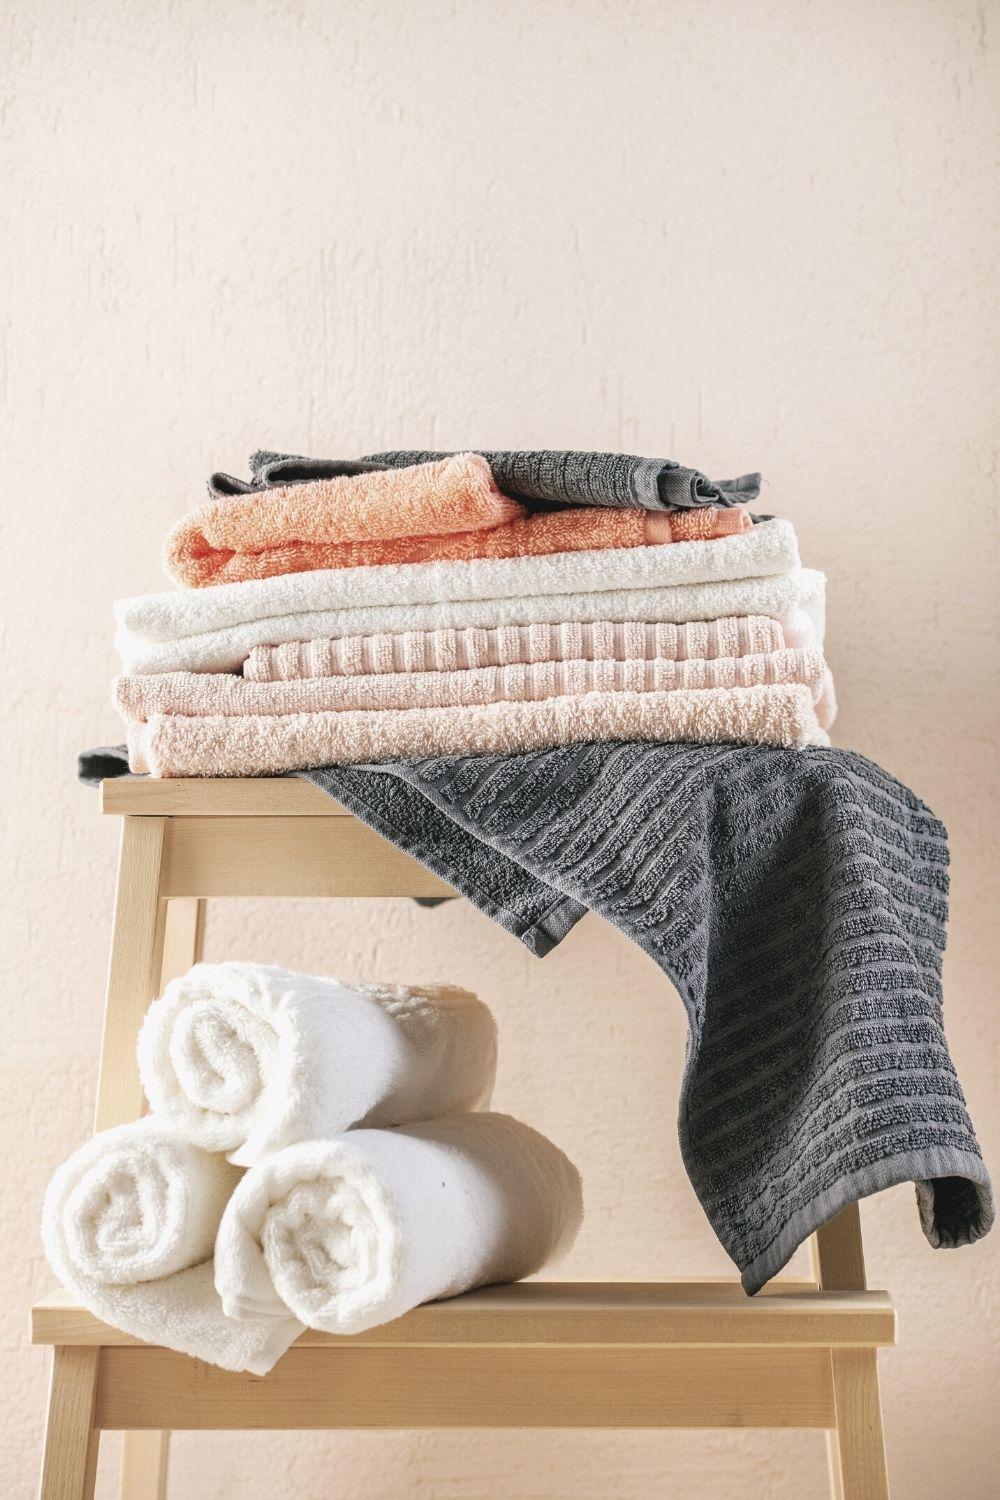 The secret to fresh, fluffy, soft towels 